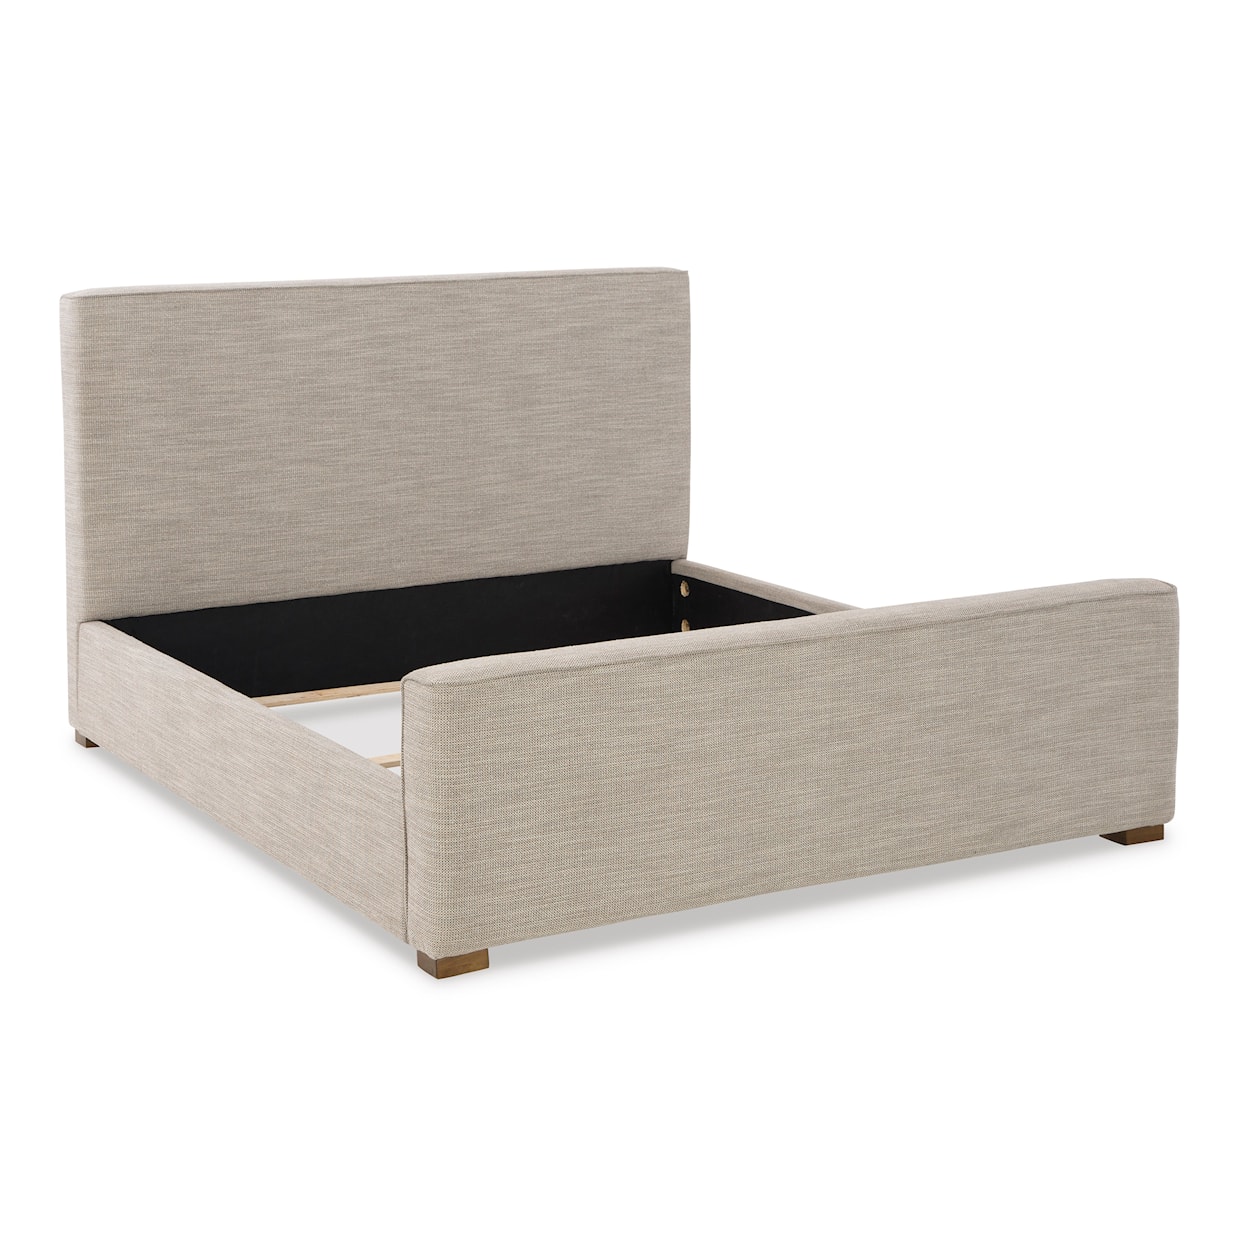 Ashley Furniture Signature Design Dakmore King Upholstered Bed